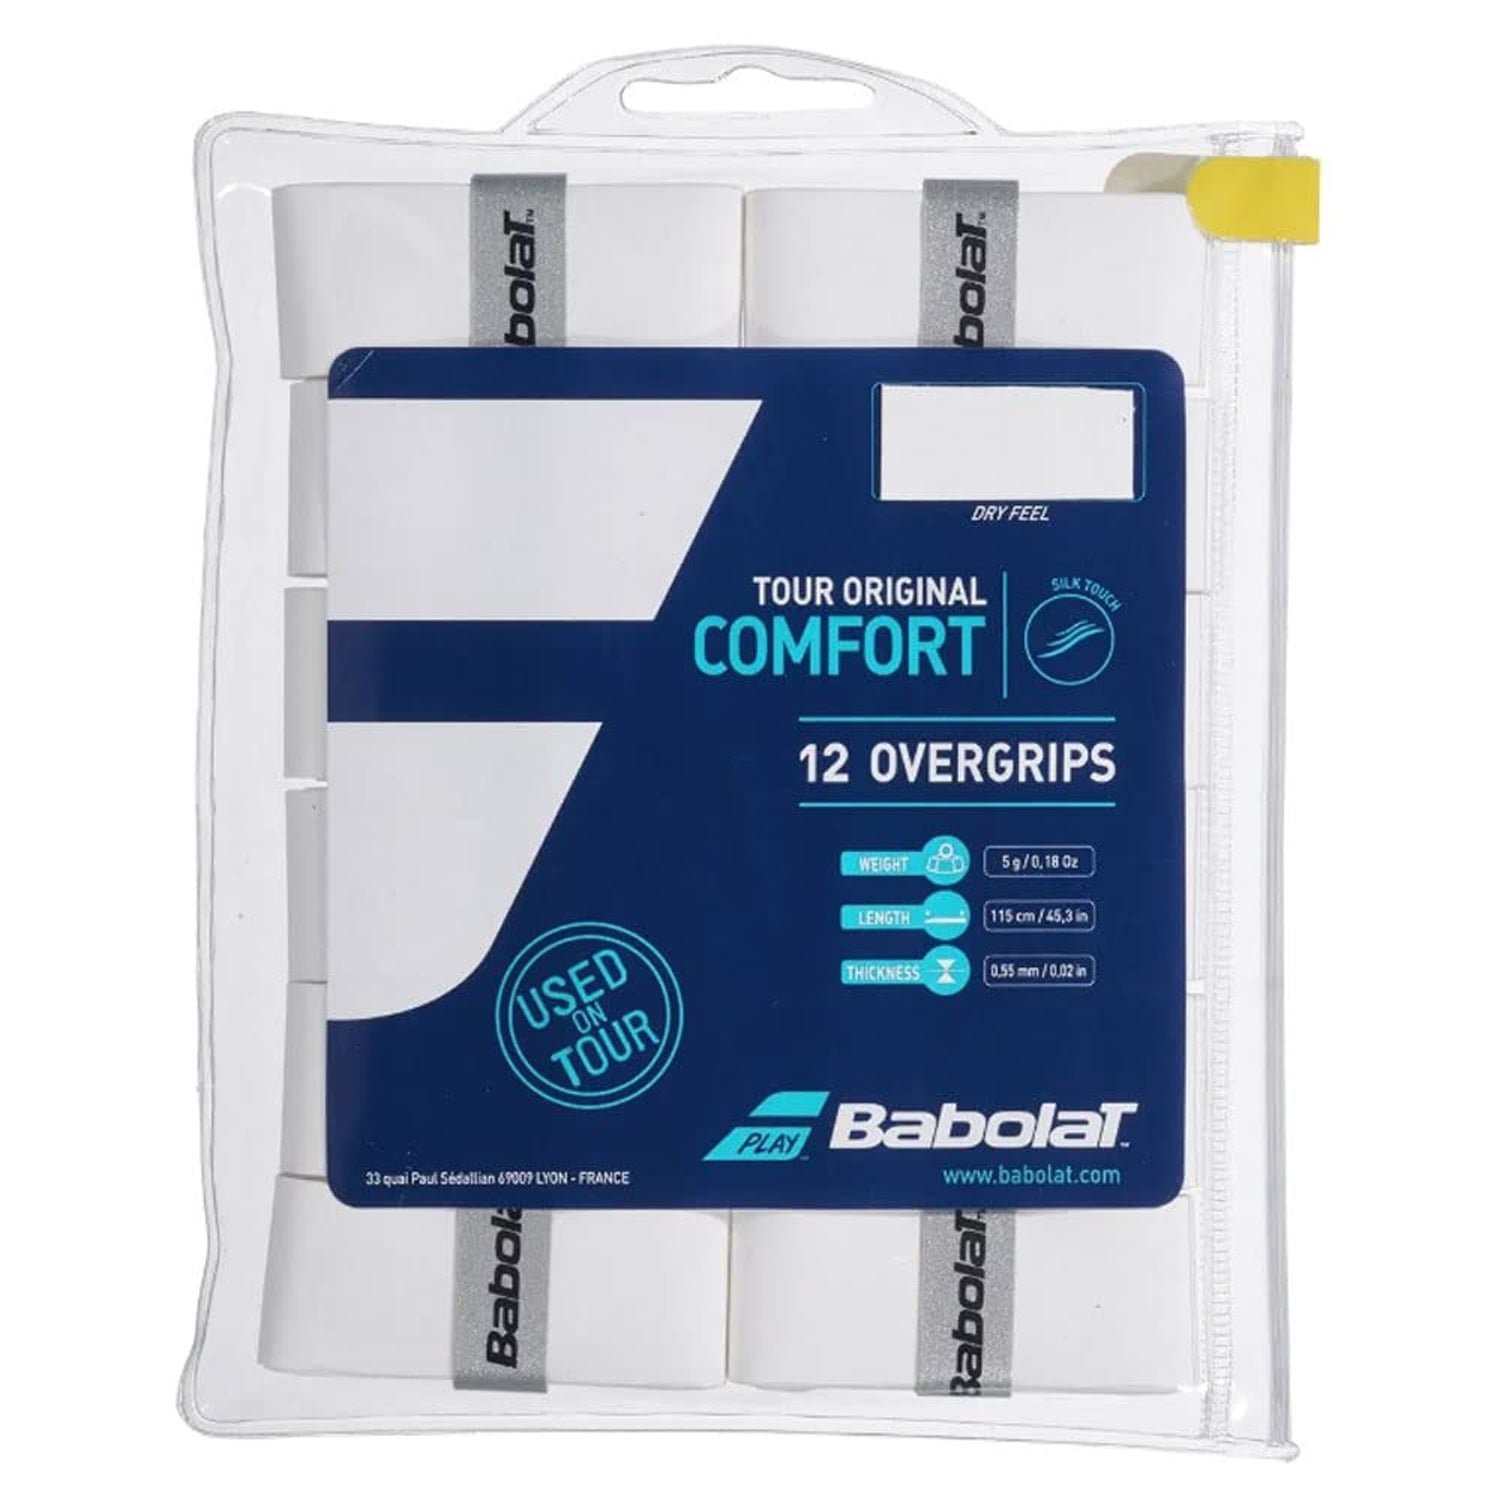 Babolat 654012-101 Tour Original X12 Tennis Grip Pack of 12 -White - Best Price online Prokicksports.com